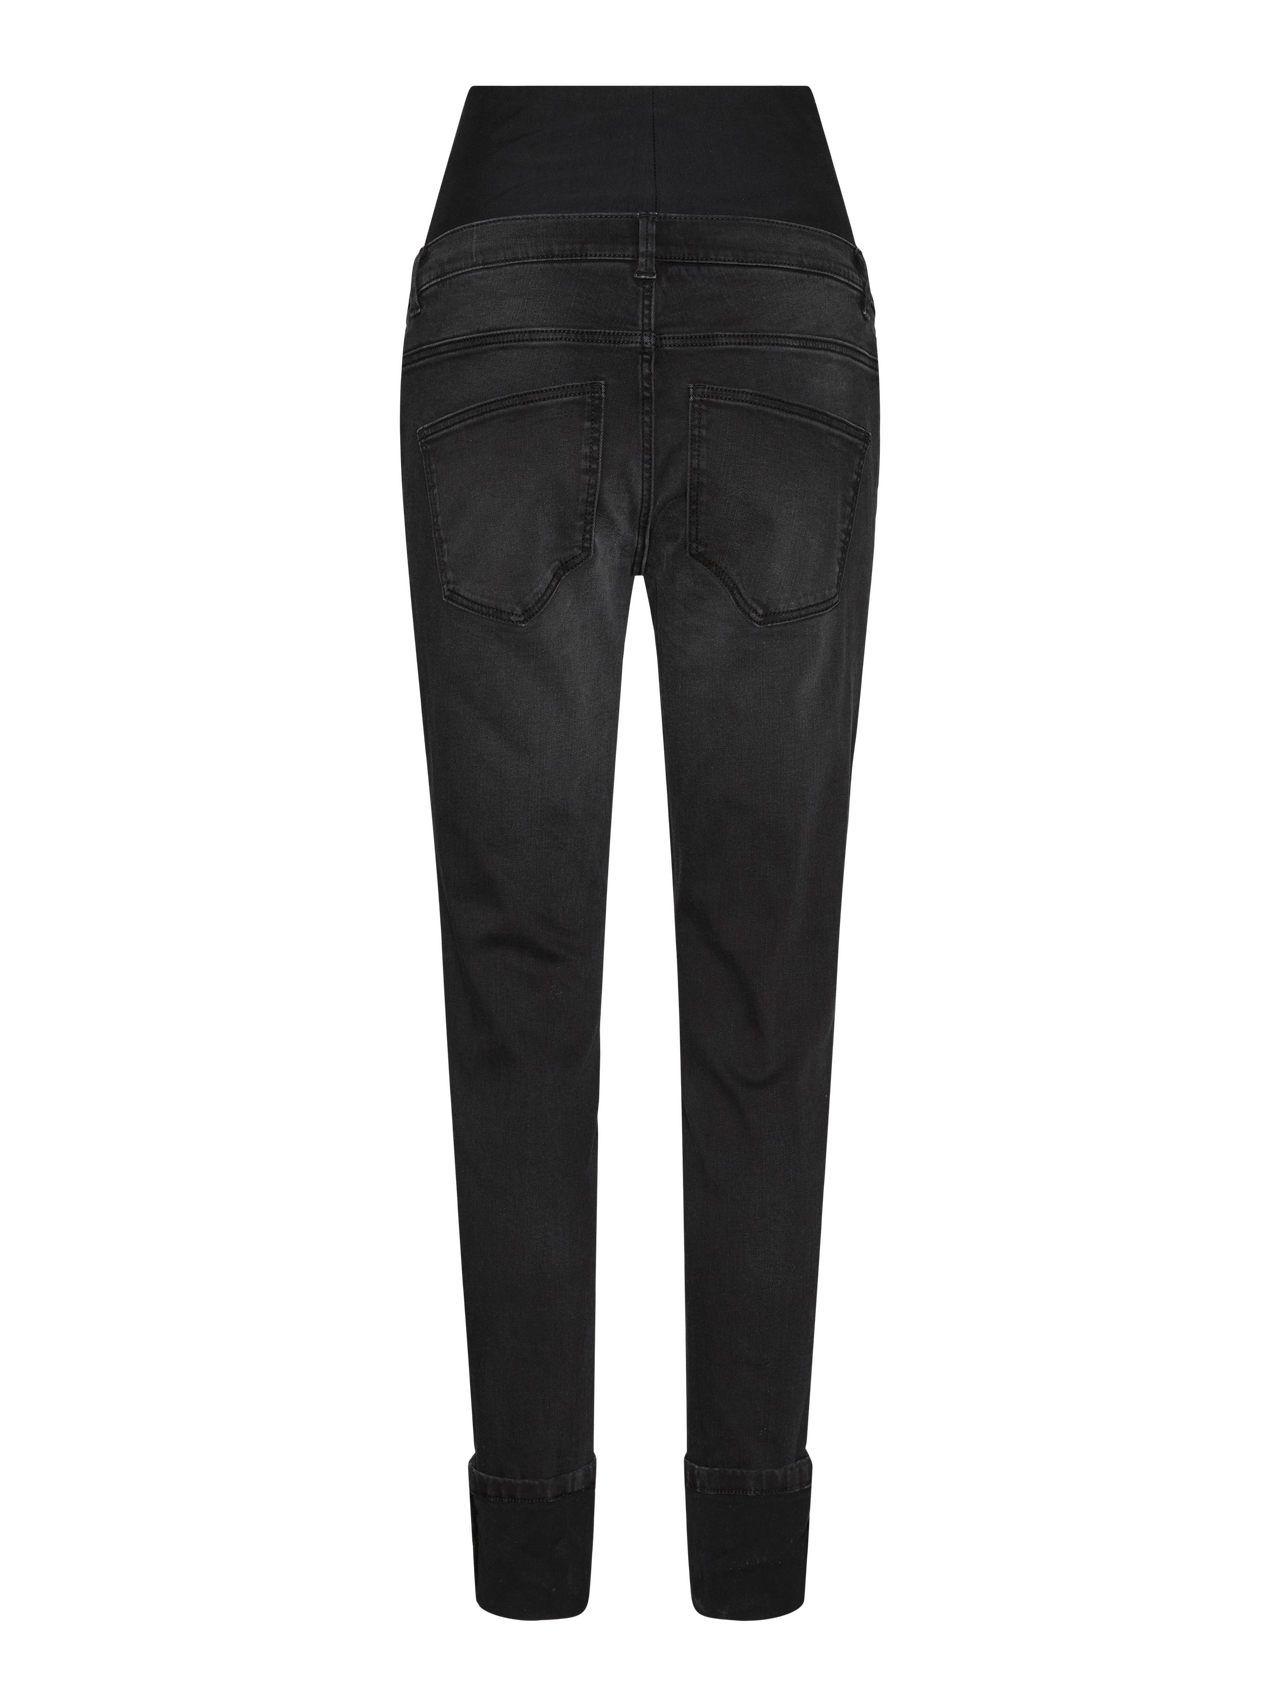 MAMA.LICIOUS Skinny Fit Fold-up hems Jeans -Black - 20020652